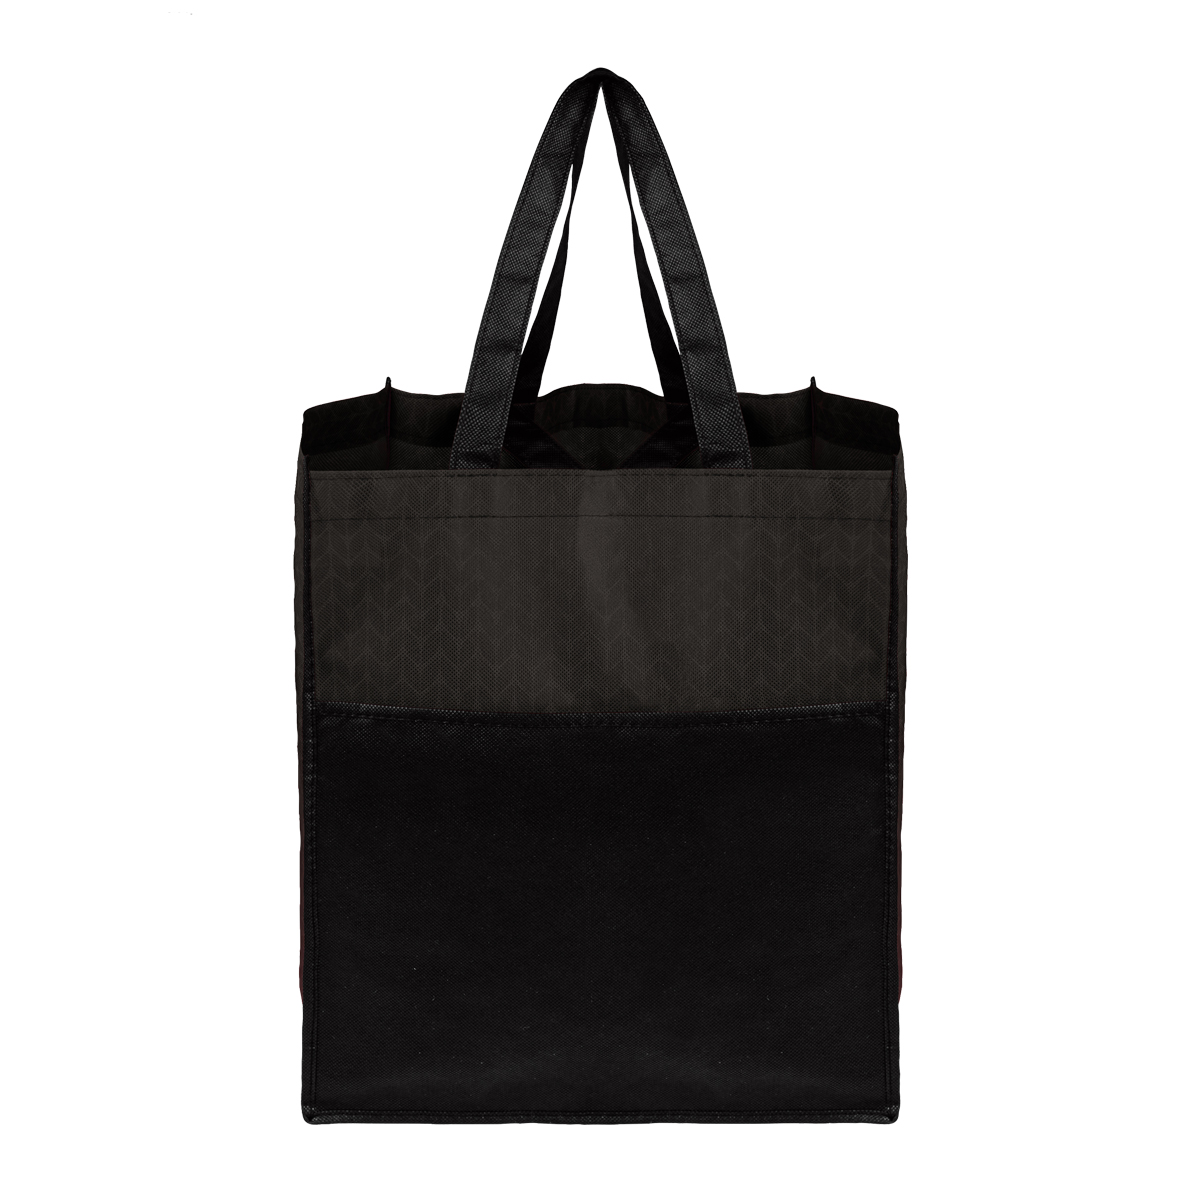 Solana Tote Bag Product Image